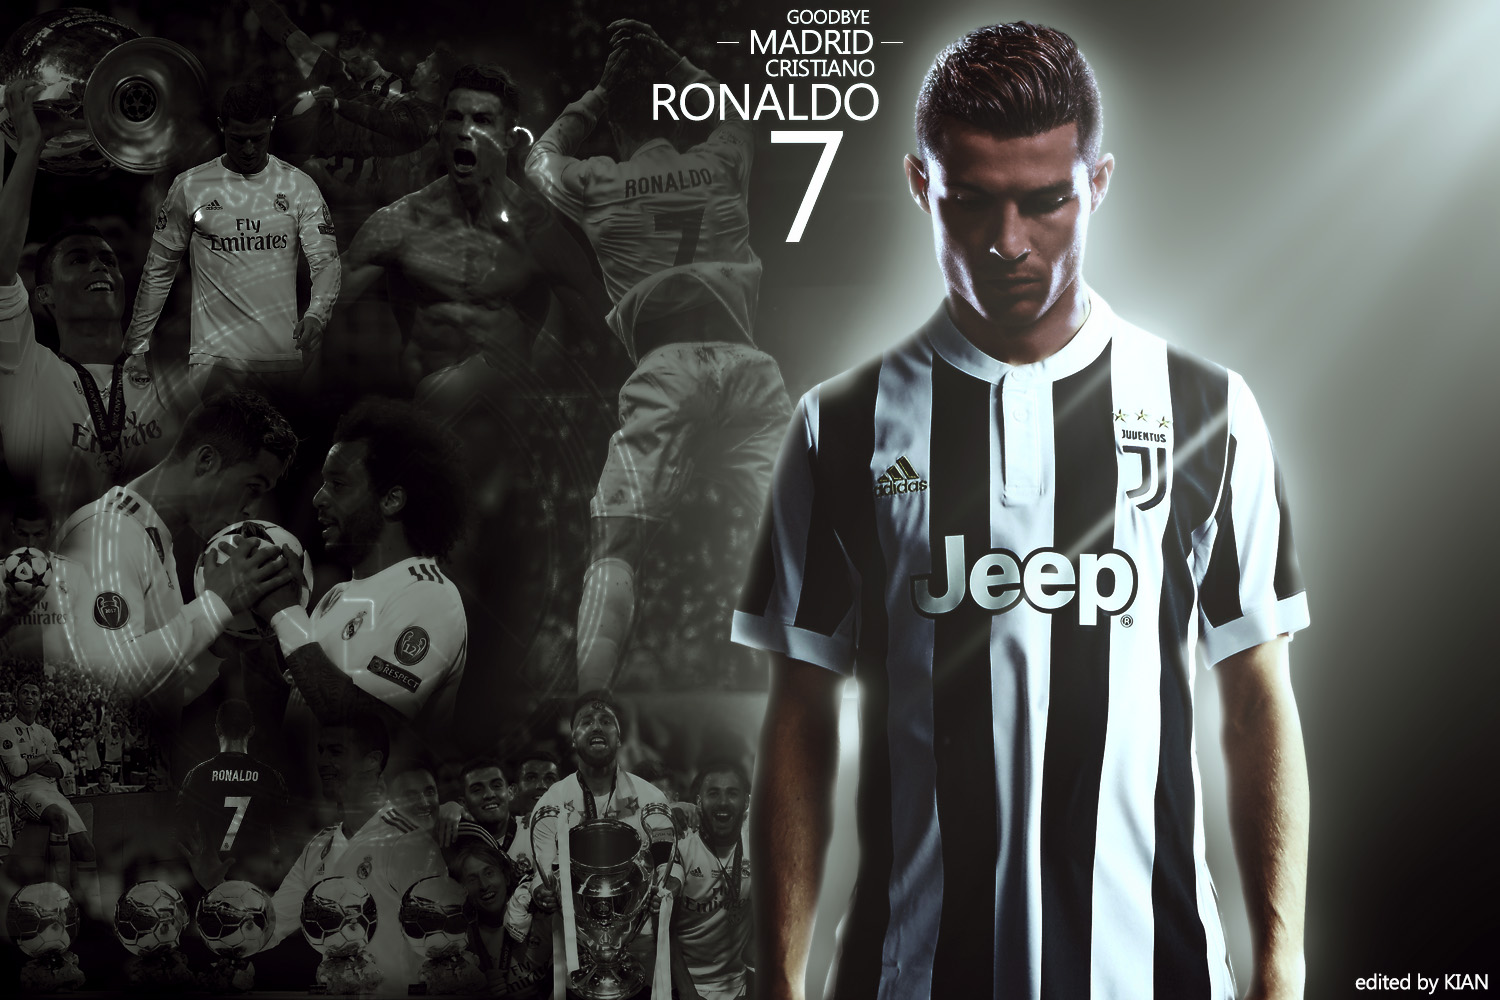 People 1500x1000 Cristiano Ronaldo Juventus soccer Real Madrid sports jerseys